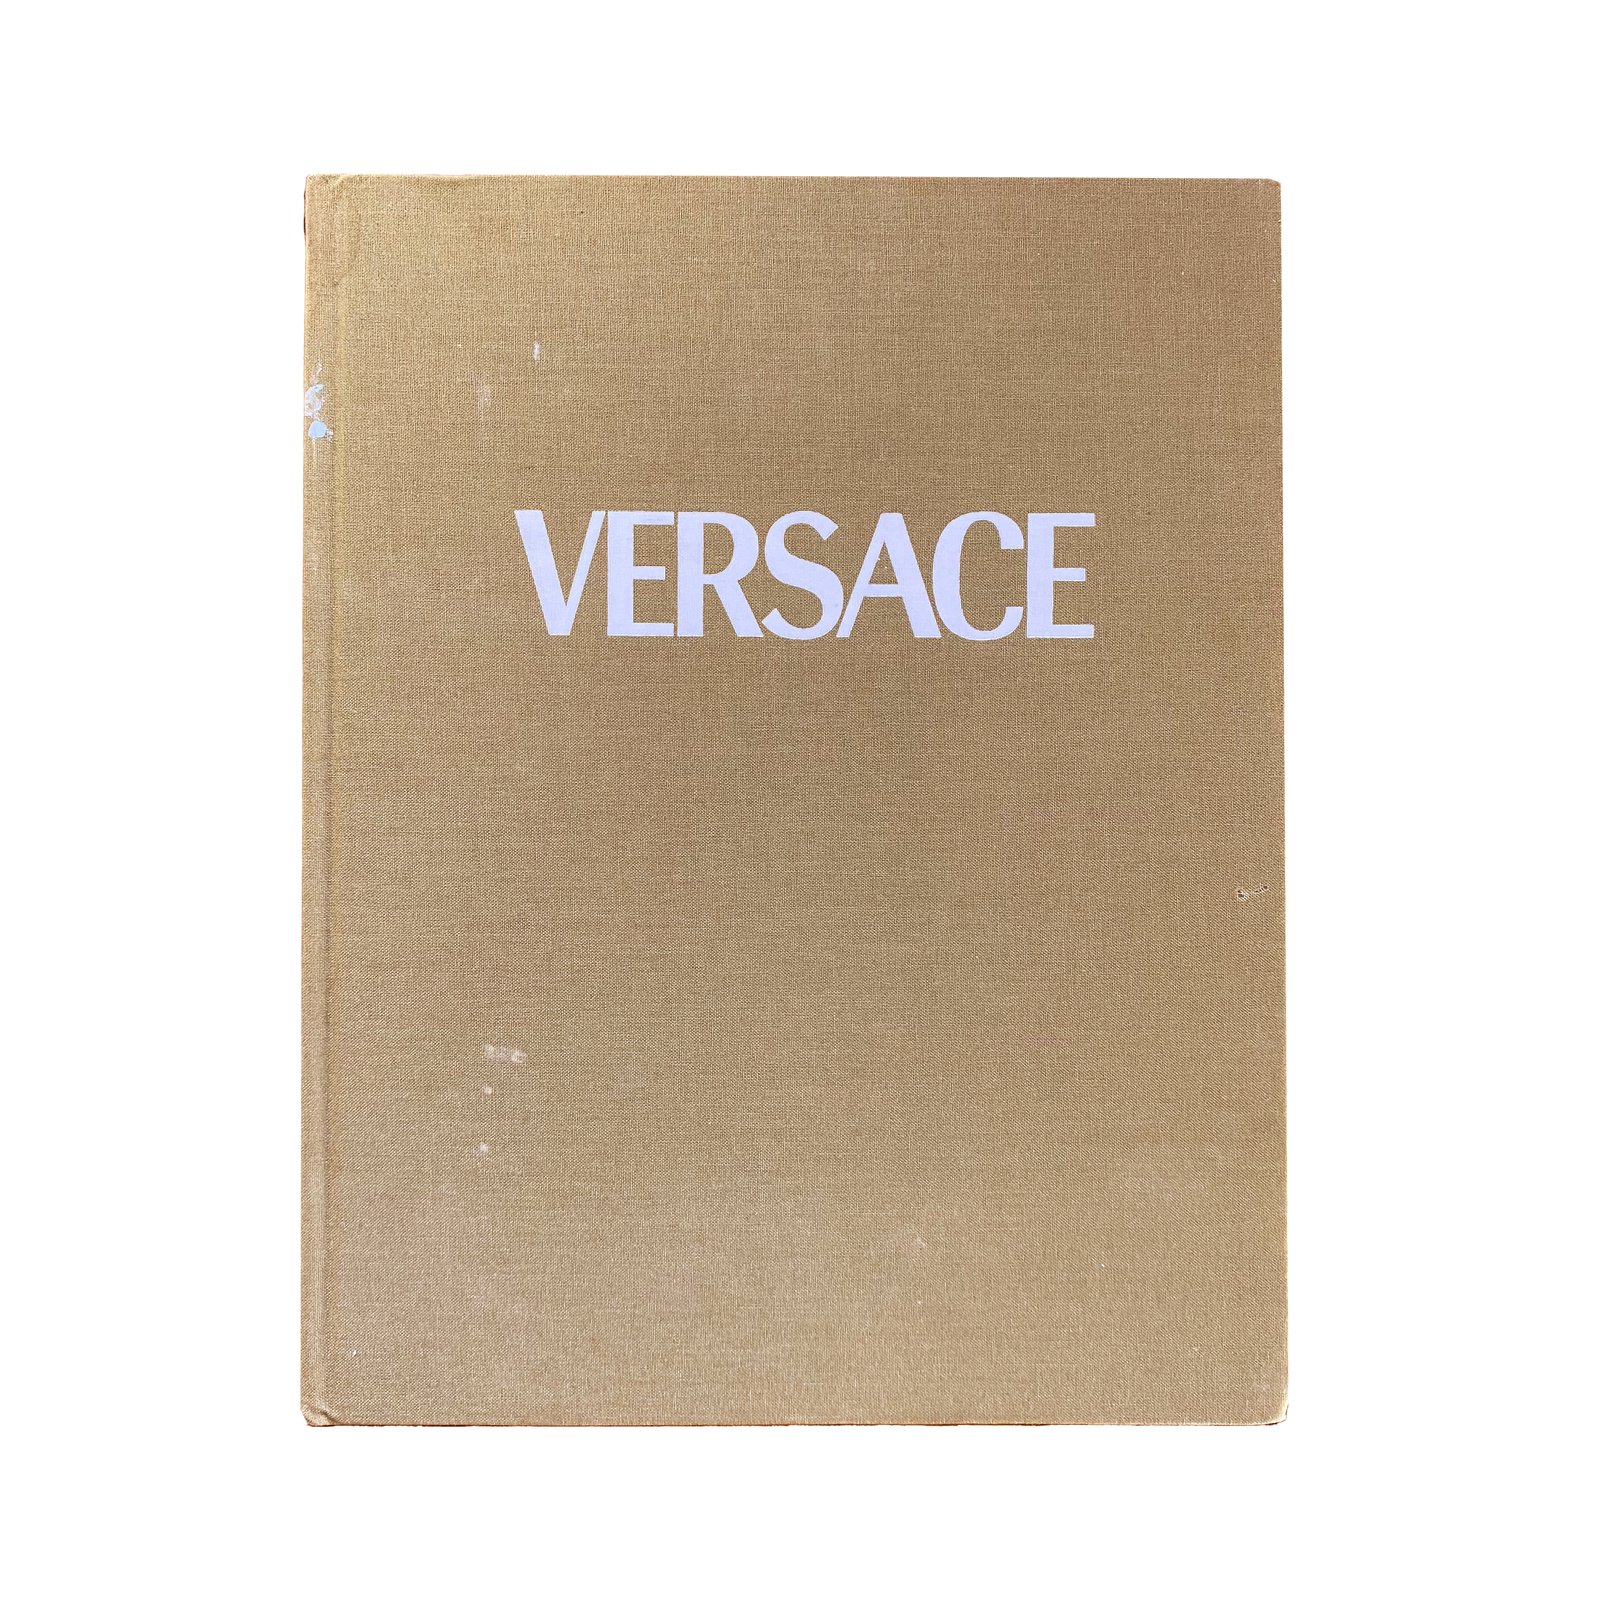 Versace Fall Winter 2000 / ERASE